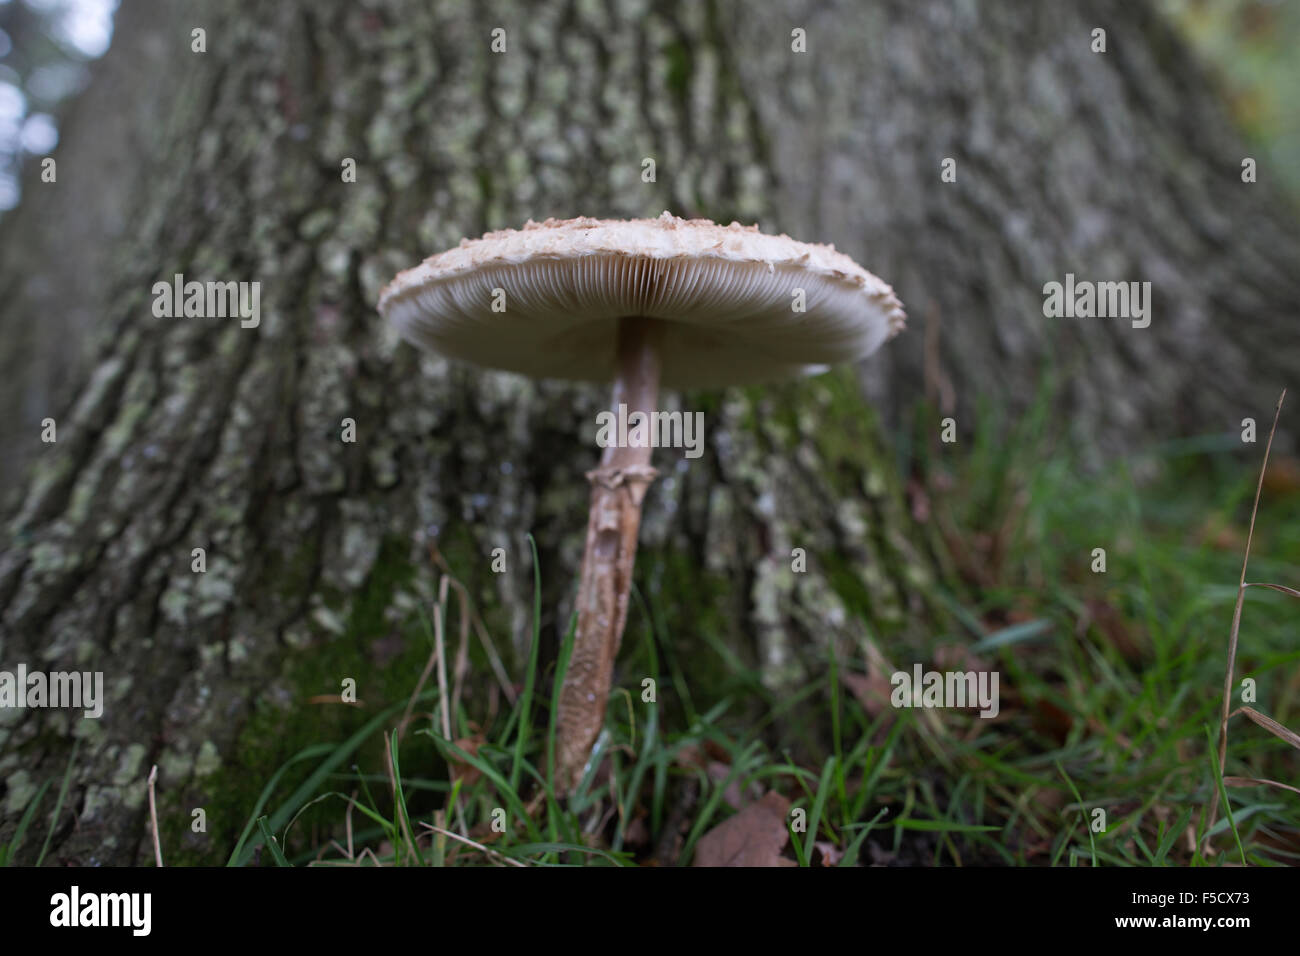 Shaggy Parasol mushroom, Chlorophyllum rhacodes, found growing in Surrey, England, UK Stock Photo